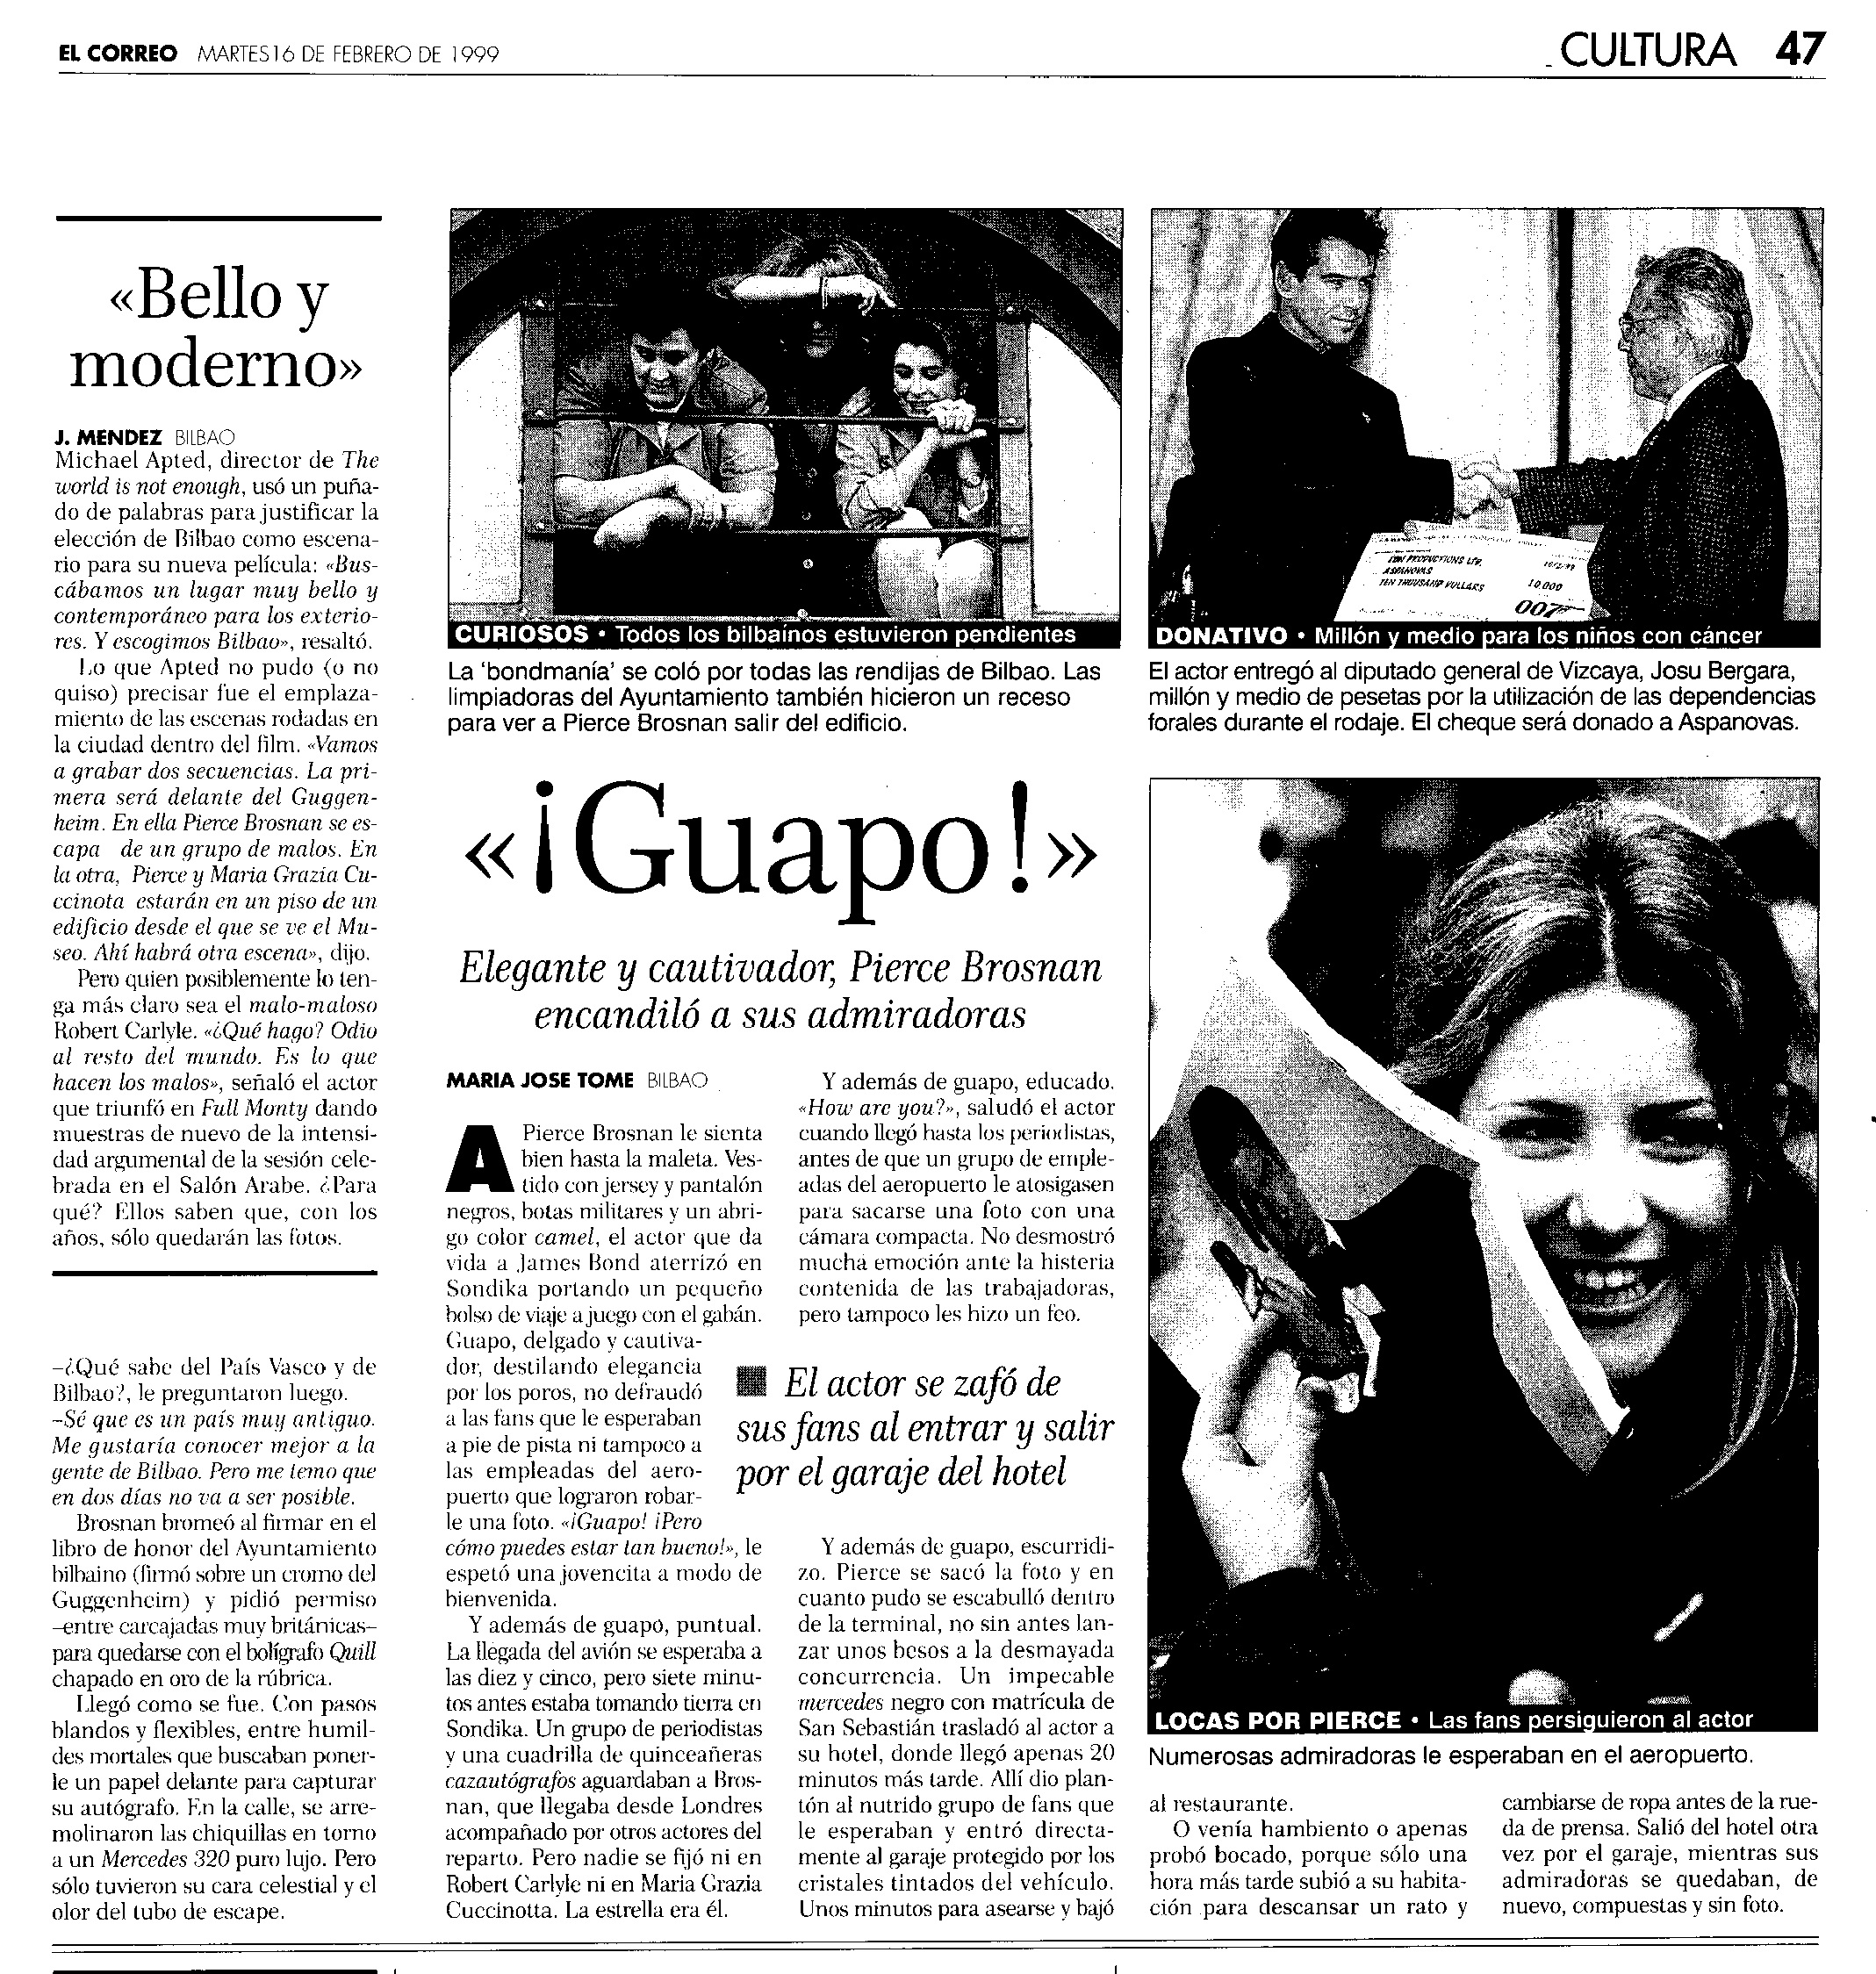 19 1999 02 16 El Correo Alava 47 Rodaje Bilbao